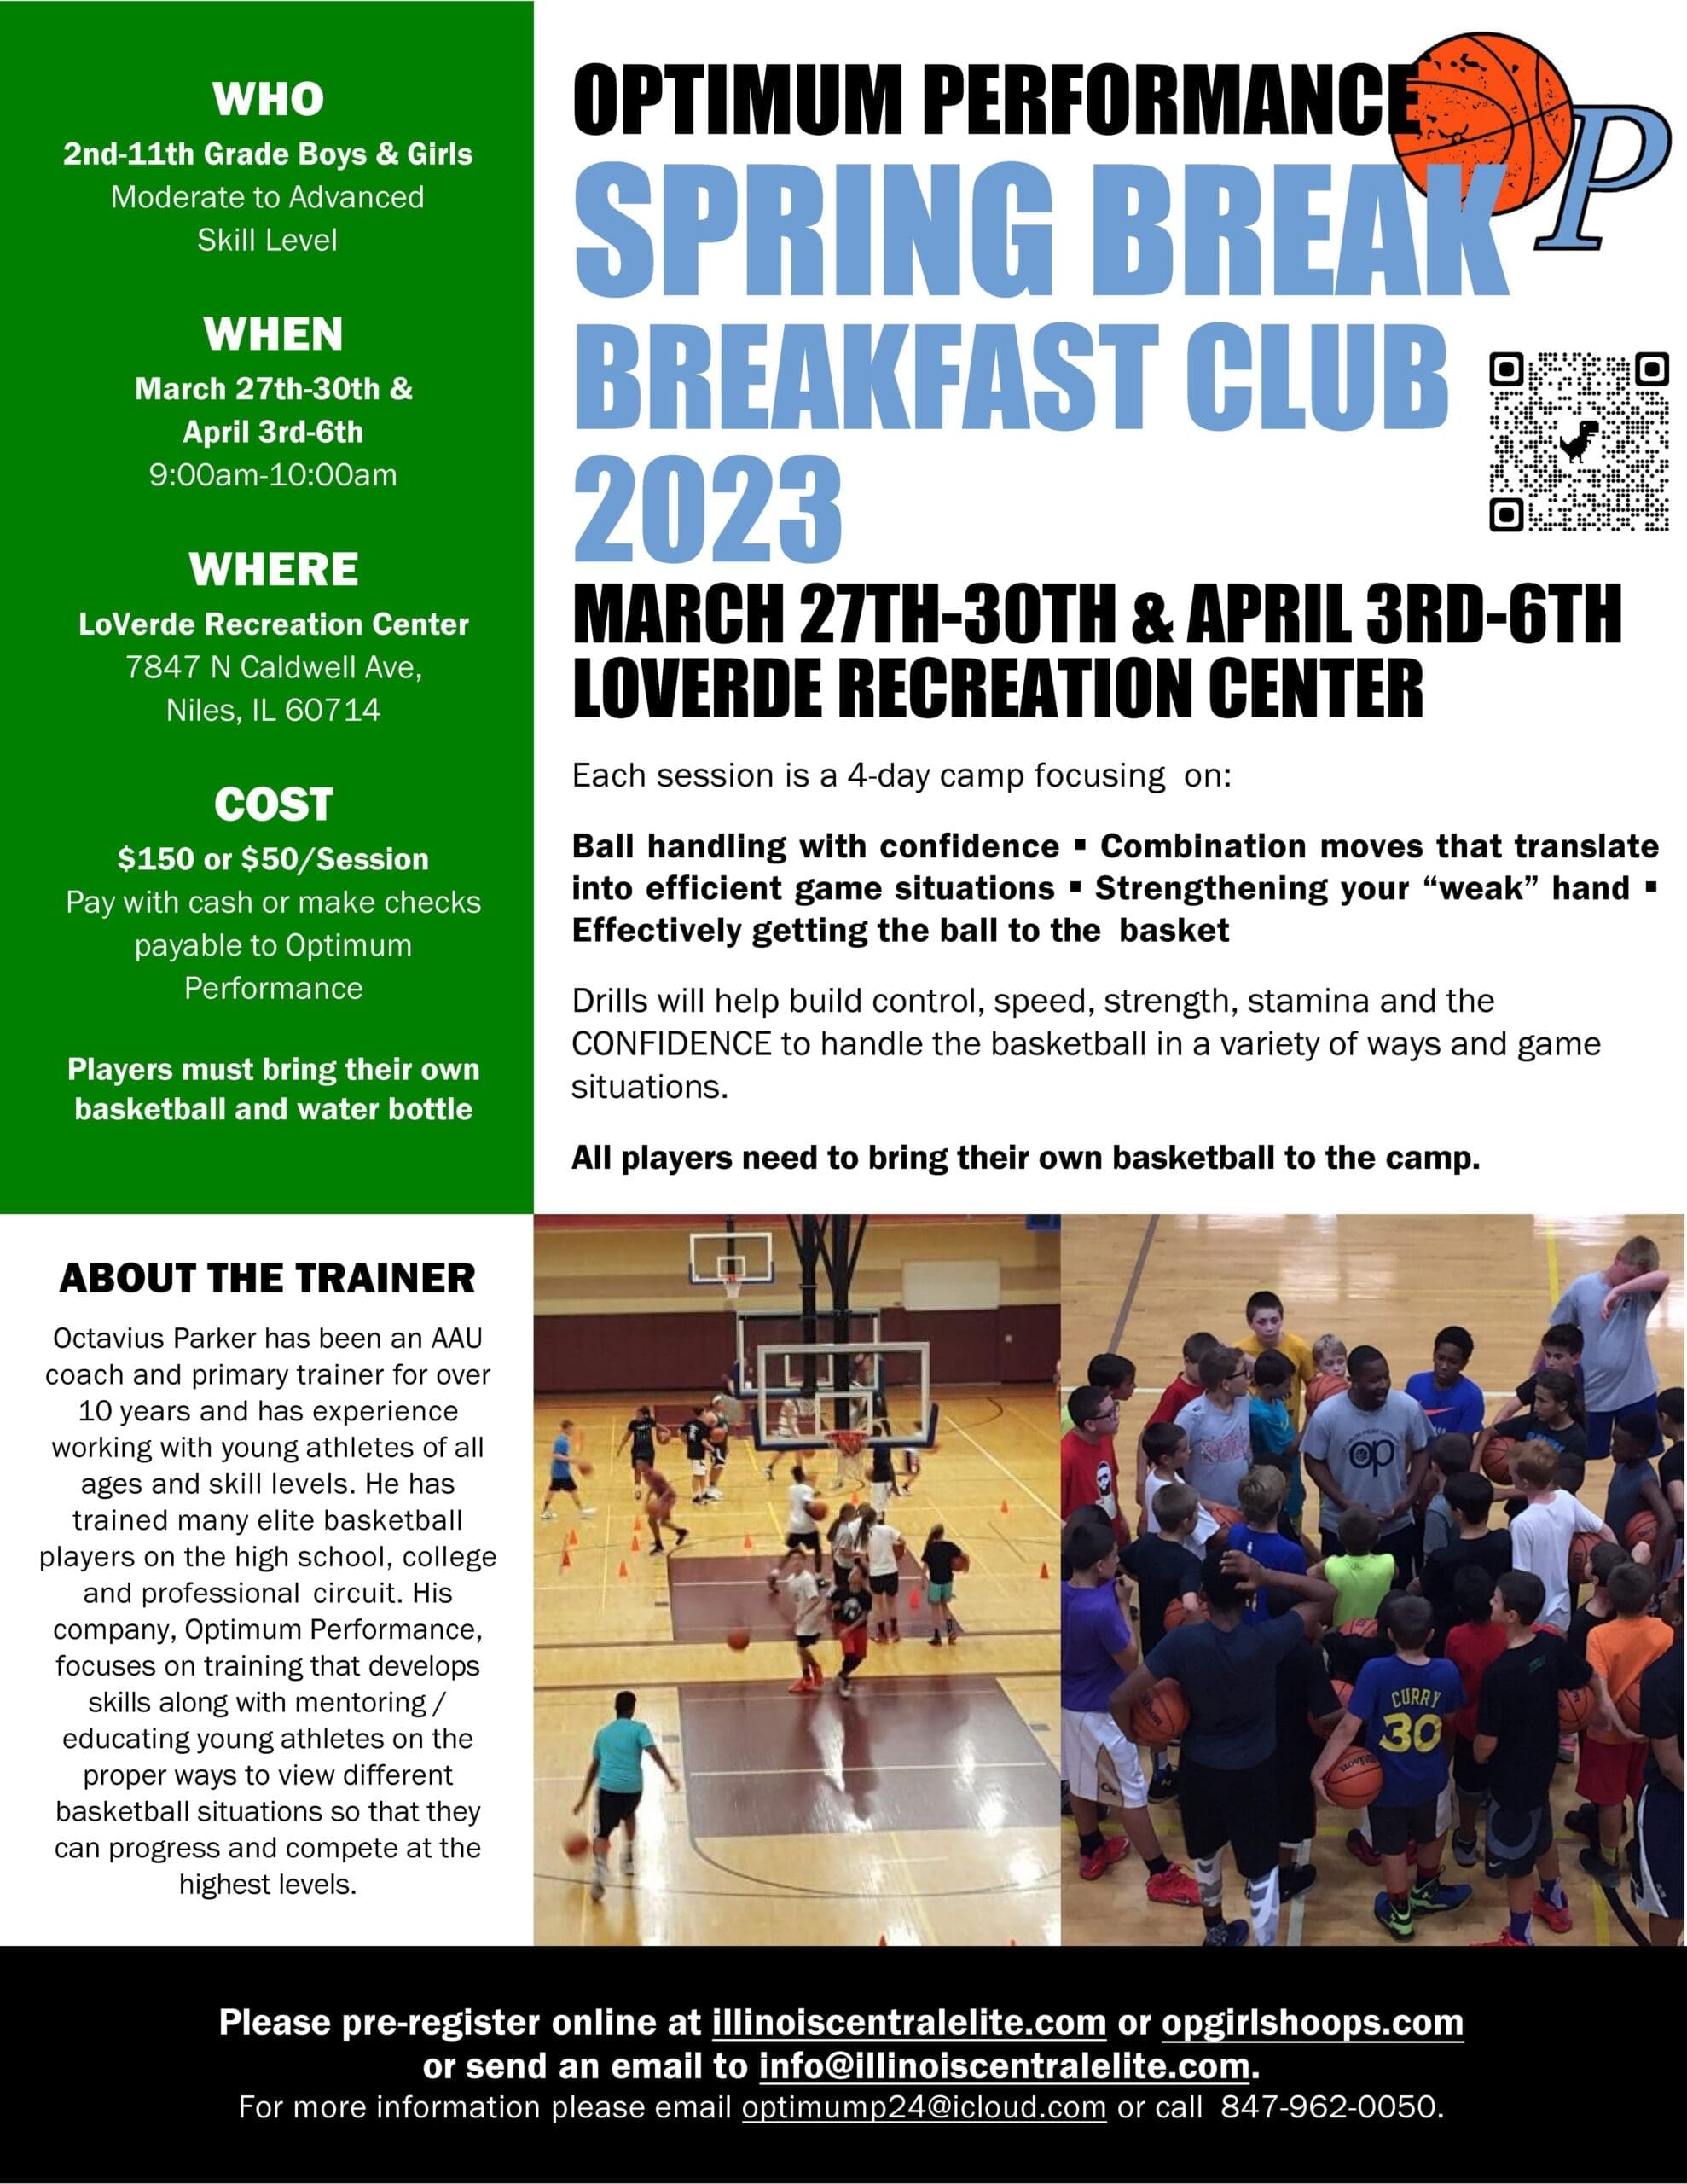 OP Spring Break Breakfast Club 2023